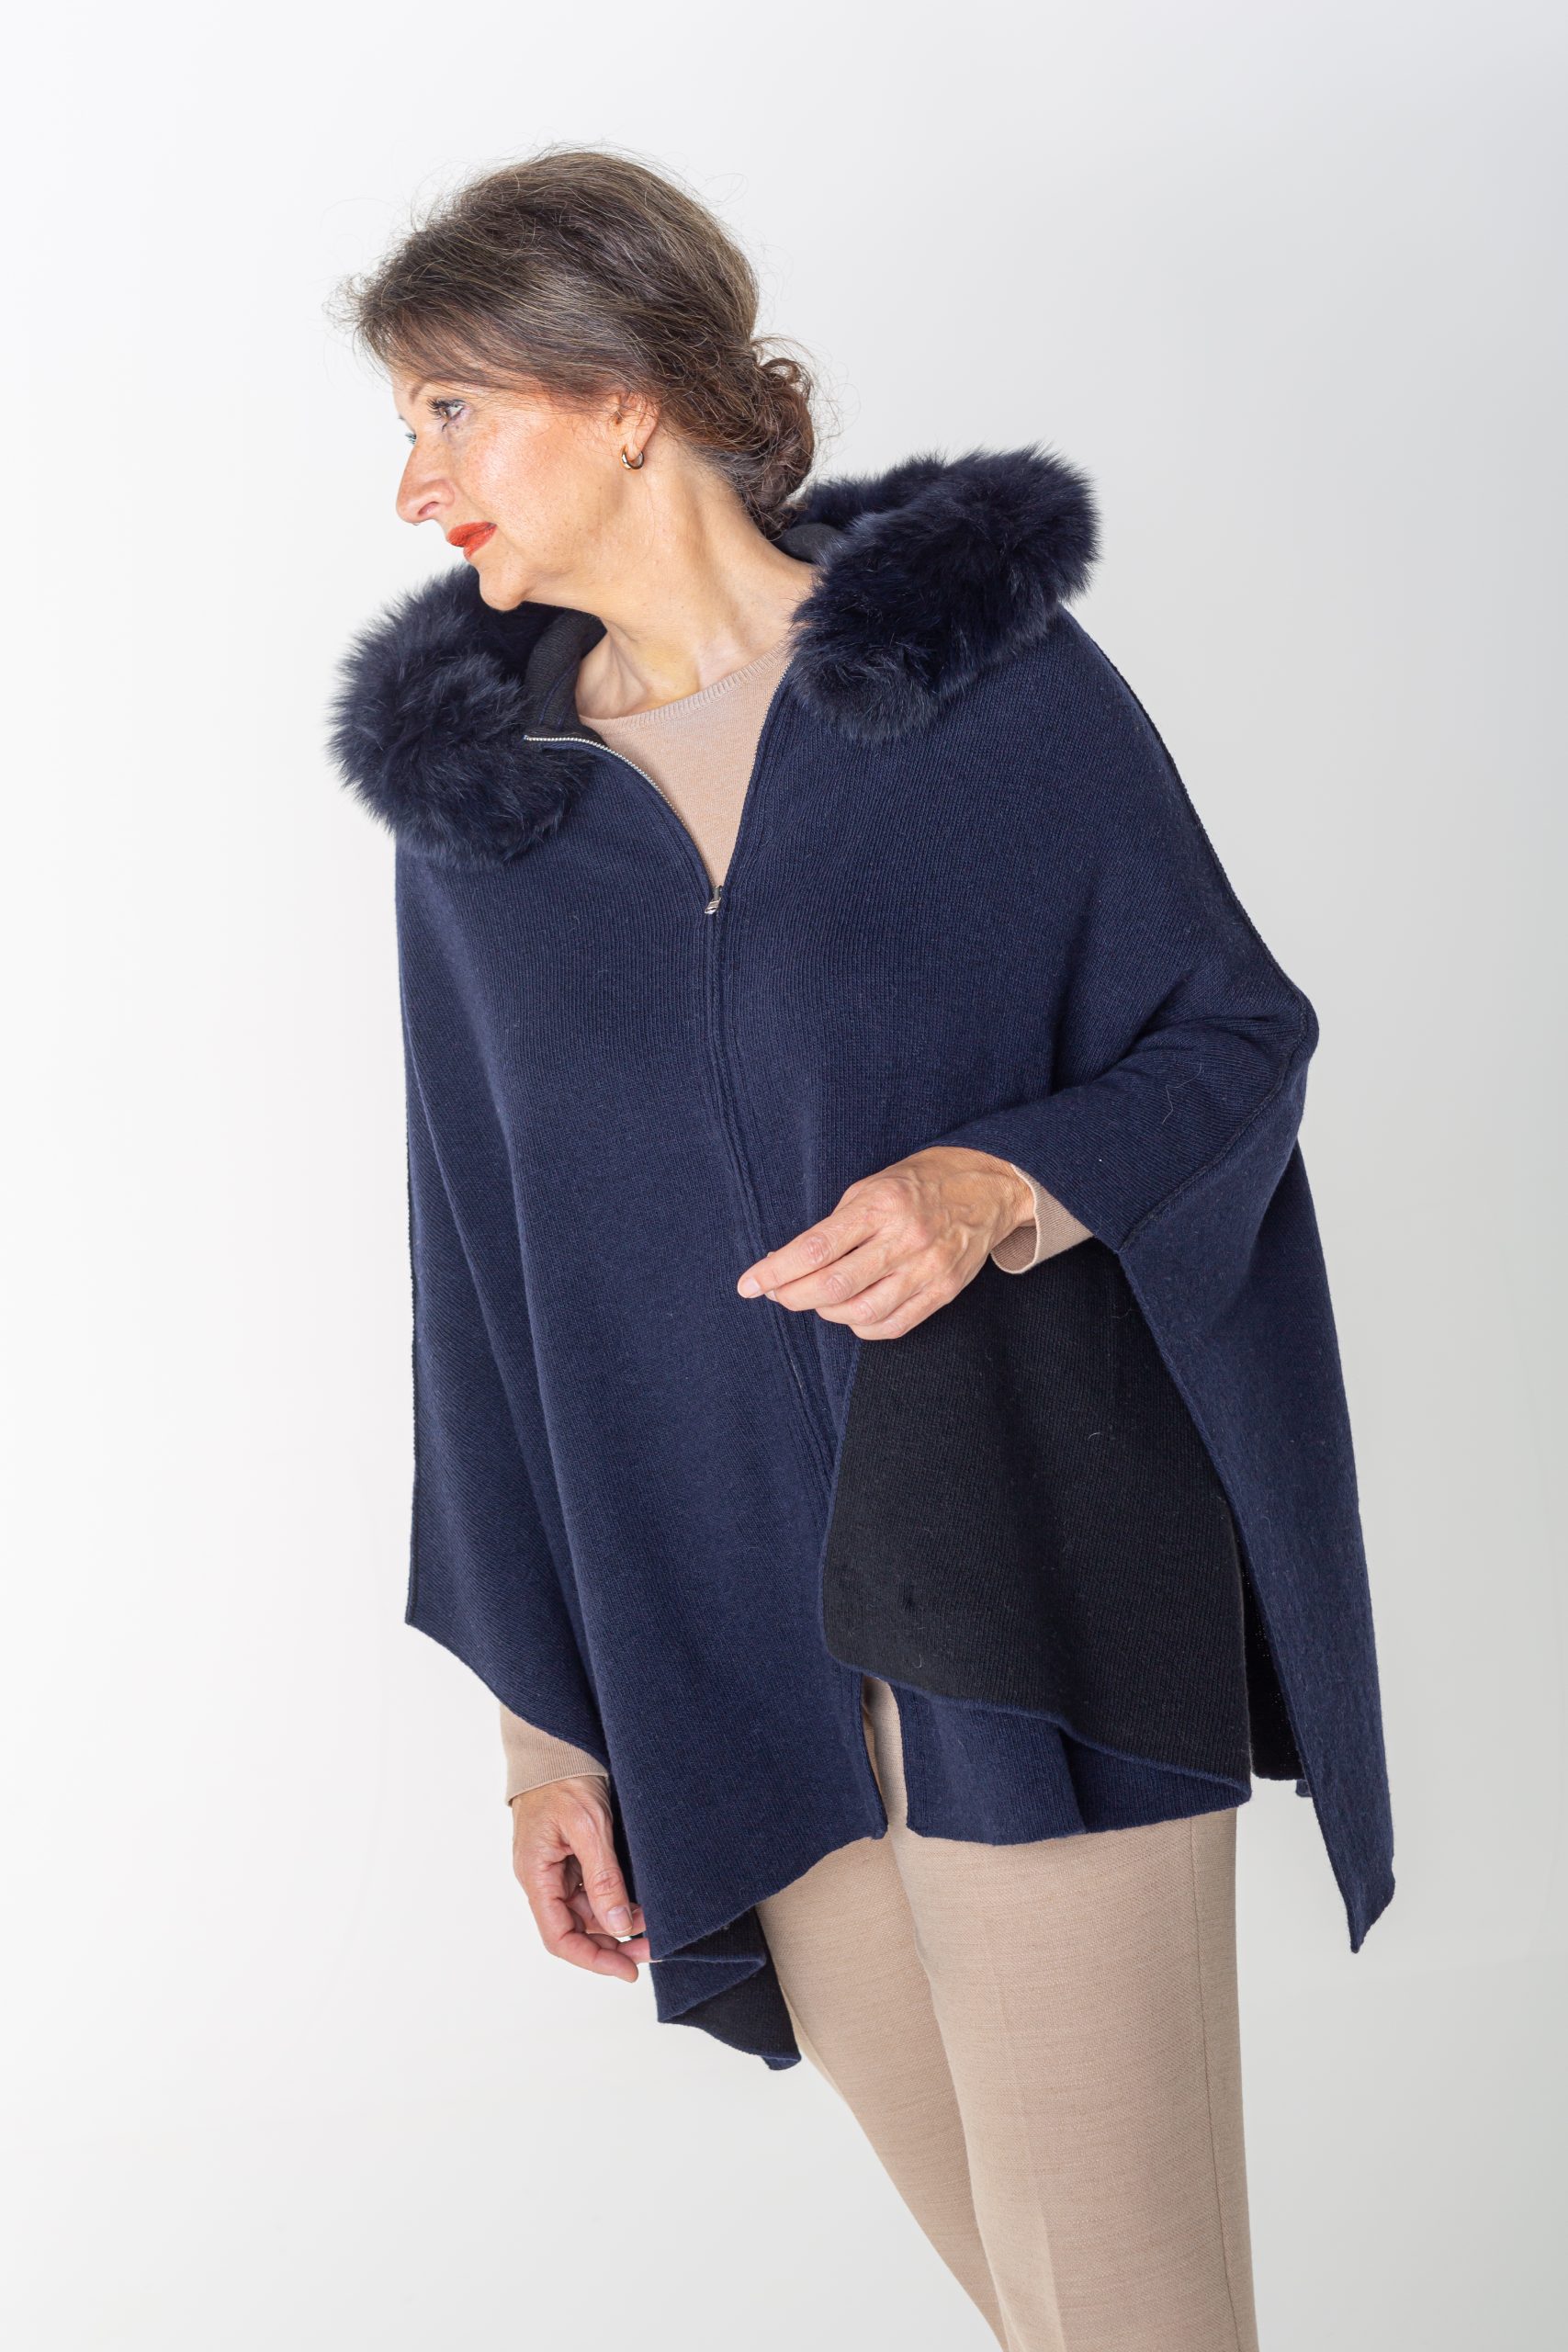 onderhoud bijgeloof Puur Luxe poncho met rits, donkerblauw zwart met bont - Lynda Ann Exclusive  Italian knitwear